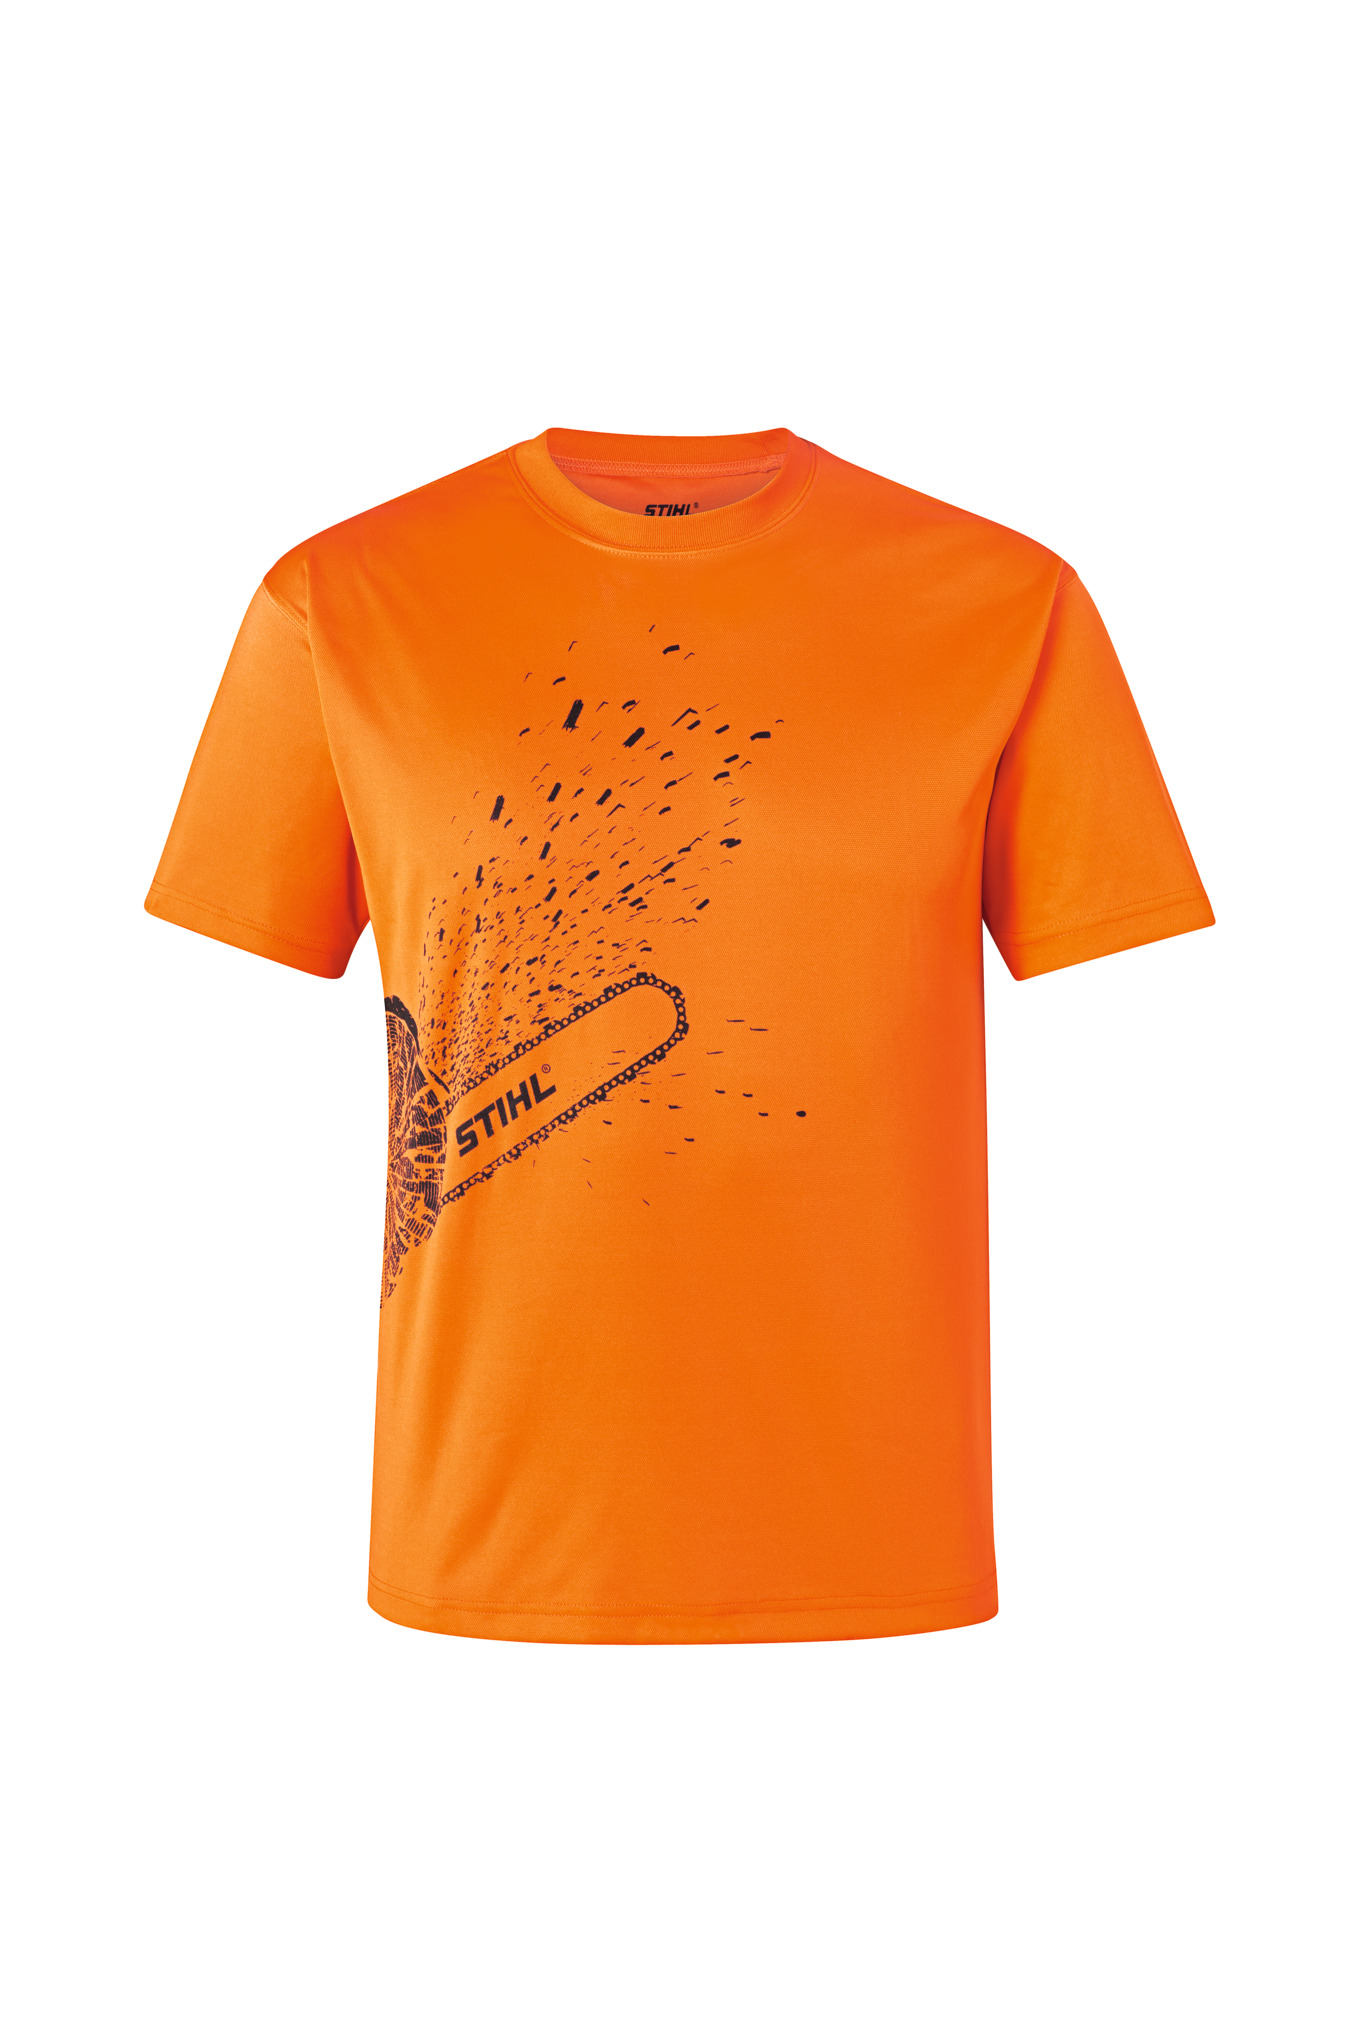 T-Shirt DYNAMIC Mag Cool, orange